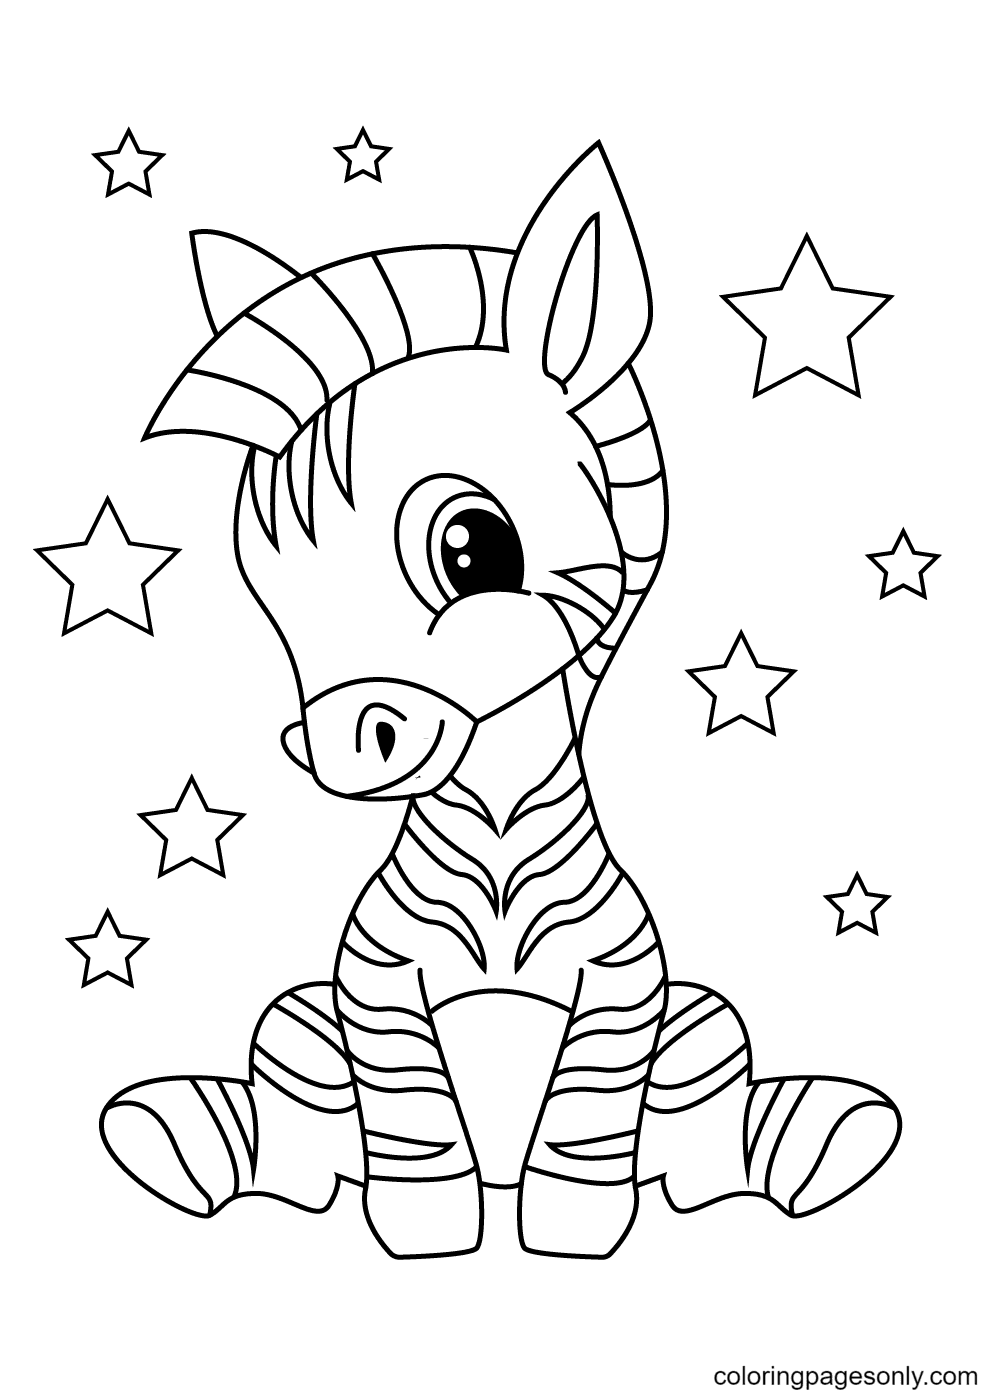 Adorable Zebra Coloring Page